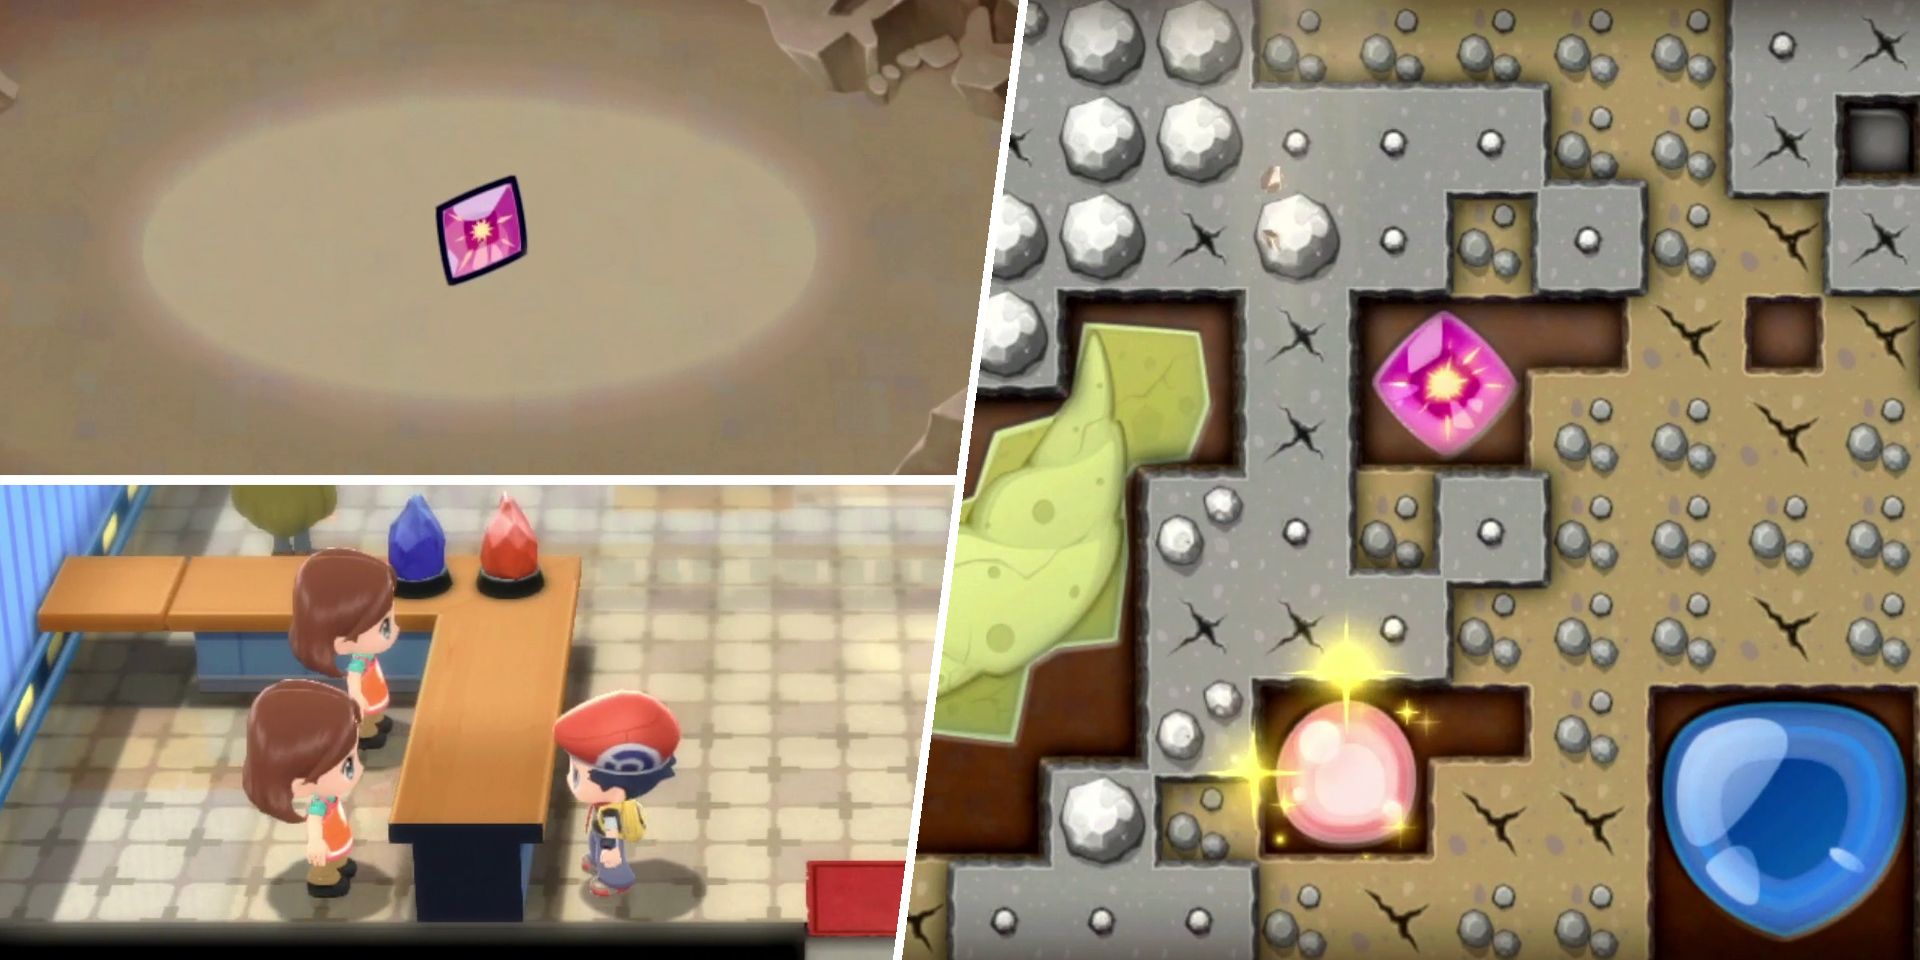 Appendix:Pokémon Brilliant Diamond and Shining Pearl Walkthrough